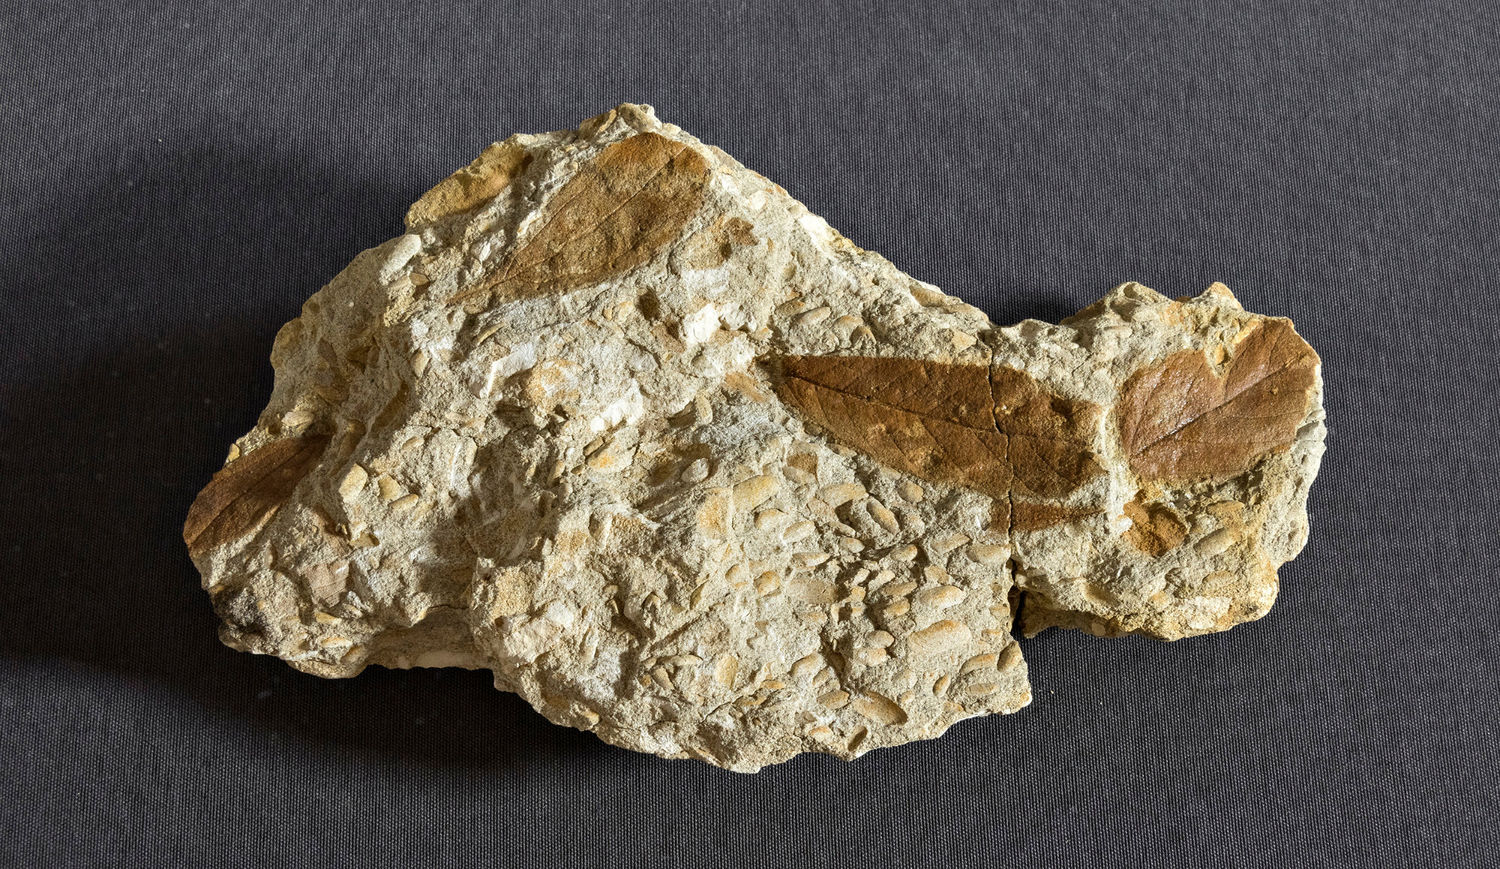 v.l. (oben) n.re. (unten): Deinotherium, Hunsrückschiefer, Blätterfossilien aus dem Tertiär, Steedener Löwe. Alle Fotos: Museum Wiesbaden / Bernd Fickert